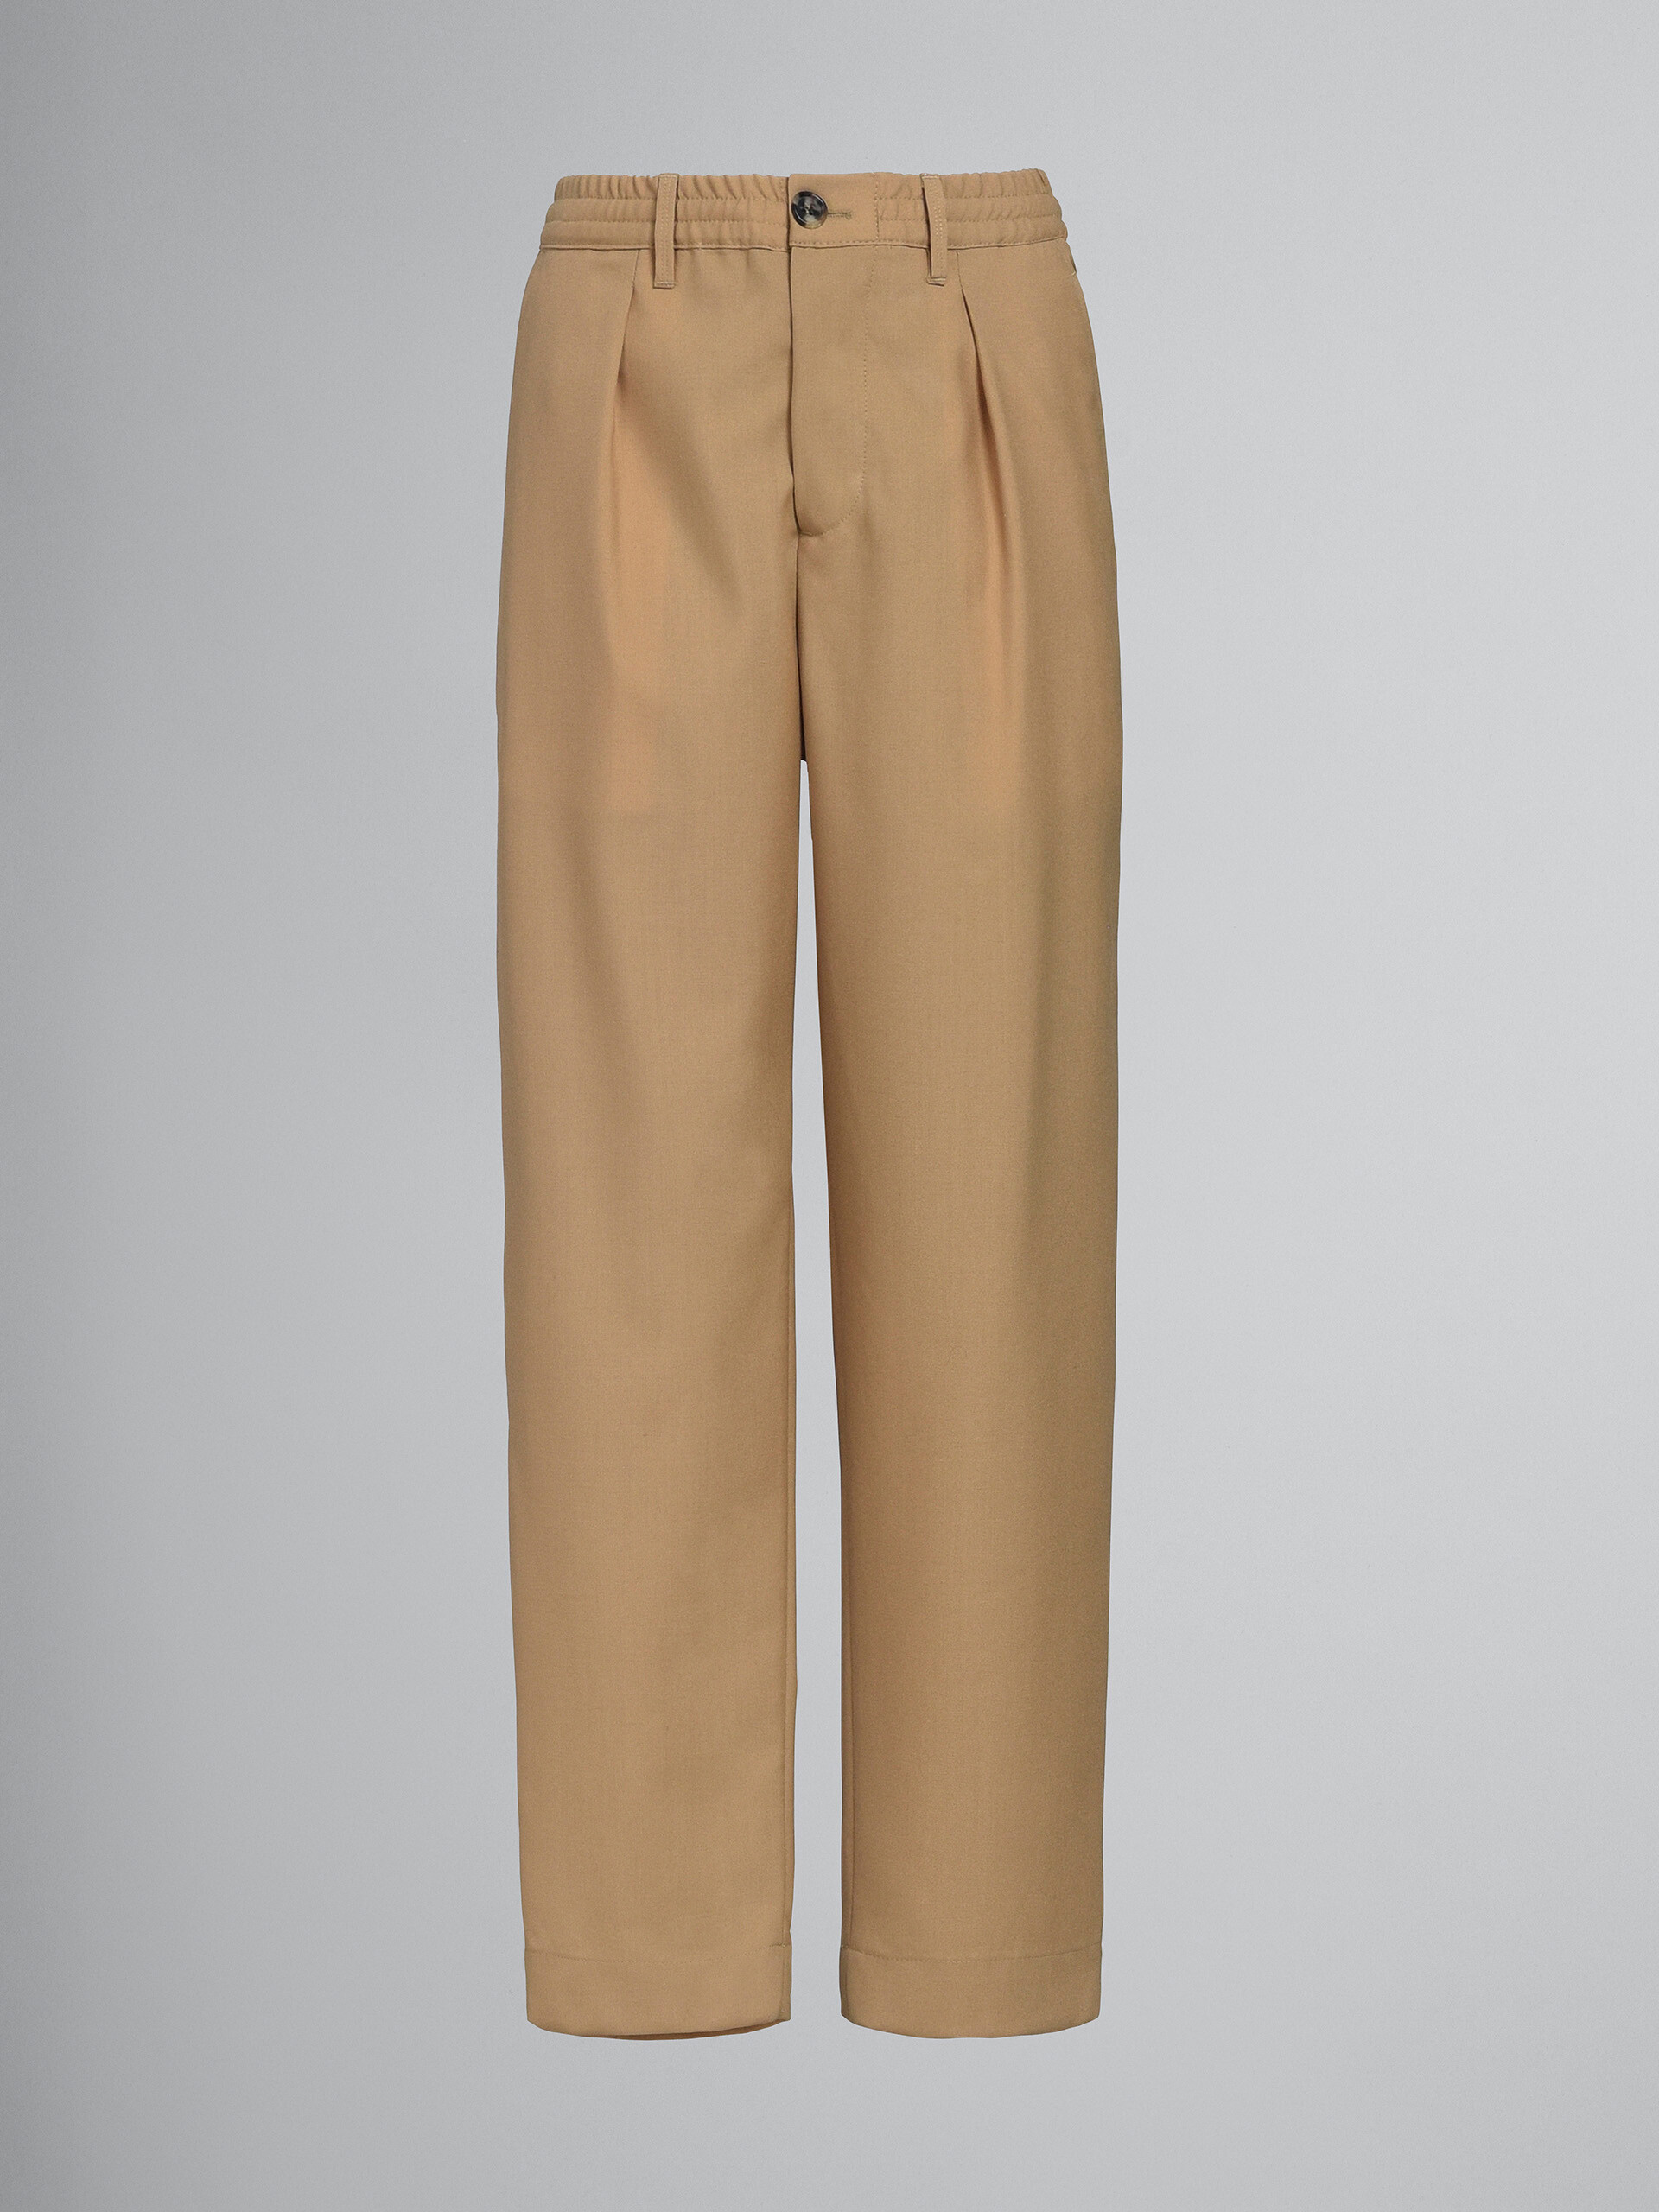 Beige tropical wool trousers - Pants - Image 1